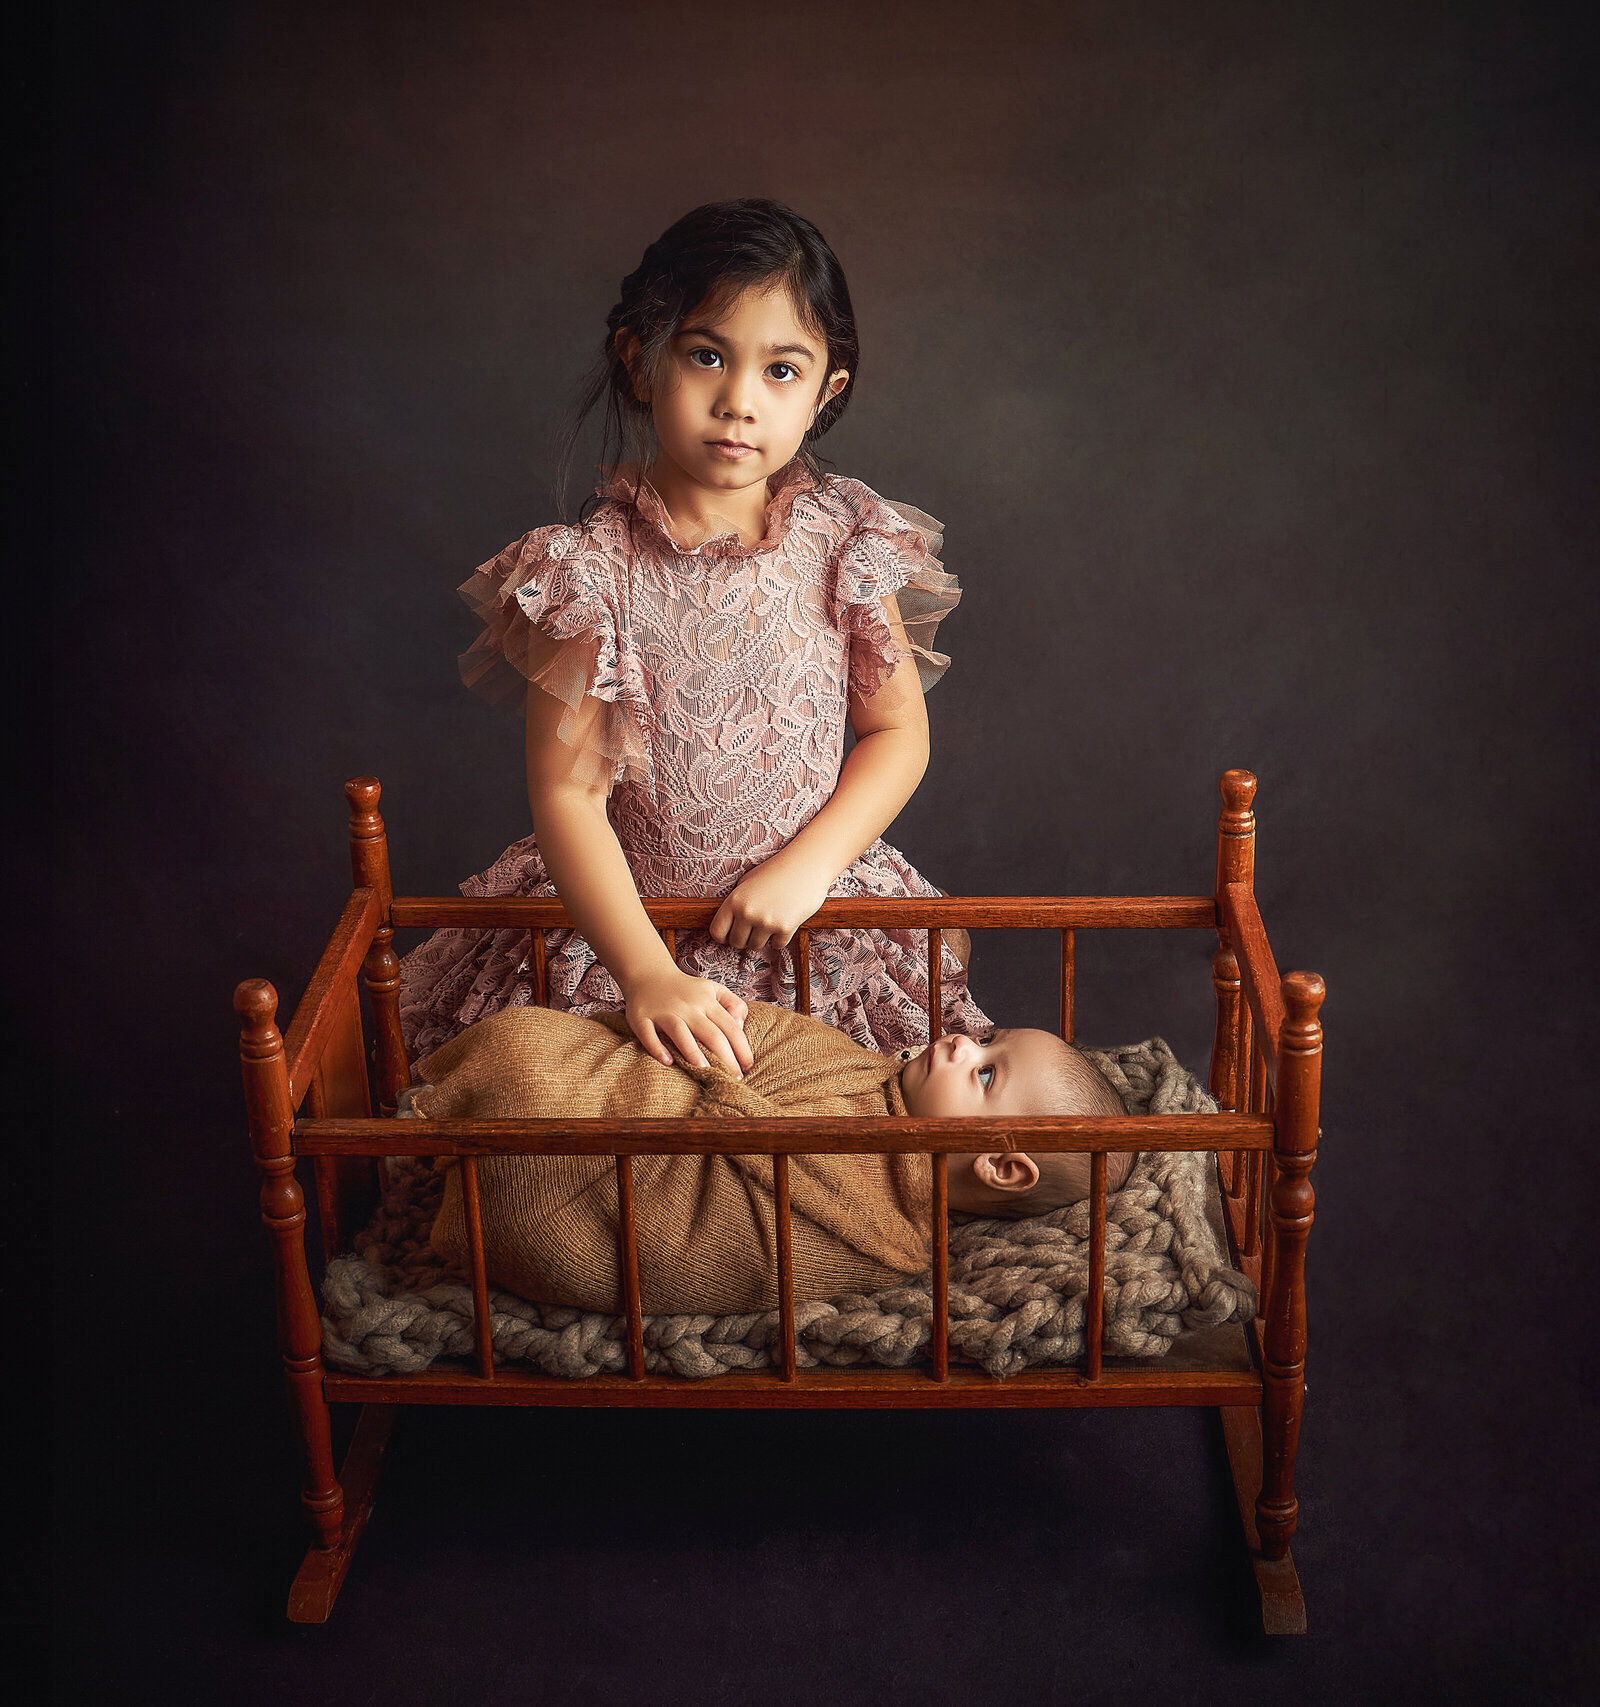 atlanta-best-award-winning-family-portrait-studio-fine-art-girl-siblings-newborn-vintage-crib-photography-photographer-twin-rivers-01